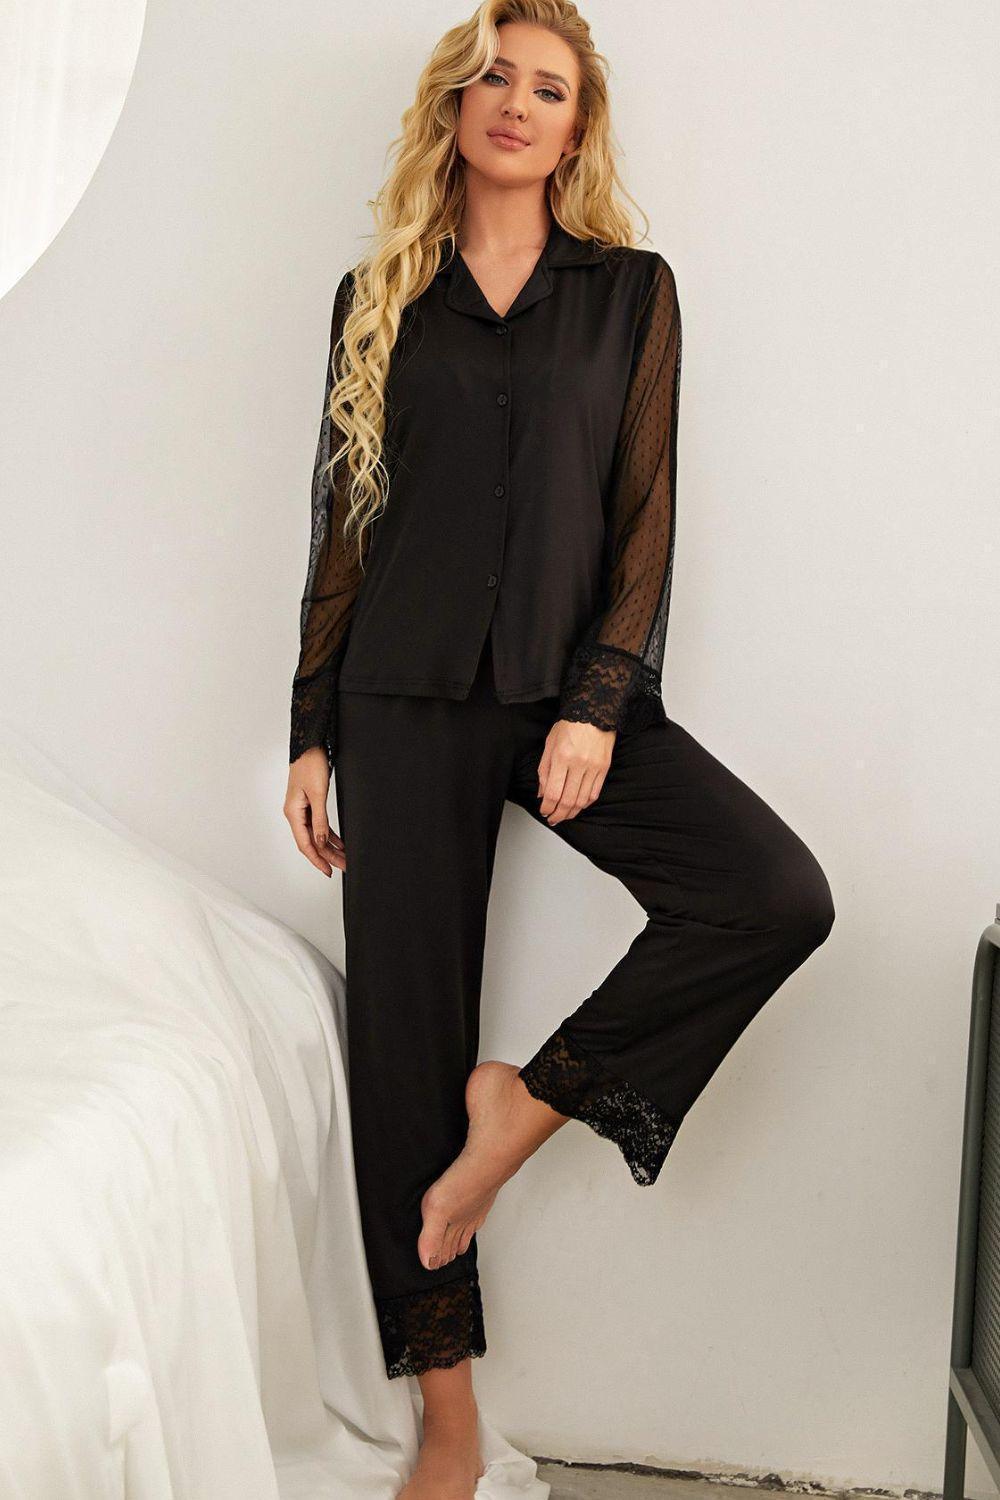 Sheer Mesh Sleeves Top And Lace Trim Pajama Sets - MXSTUDIO.COM